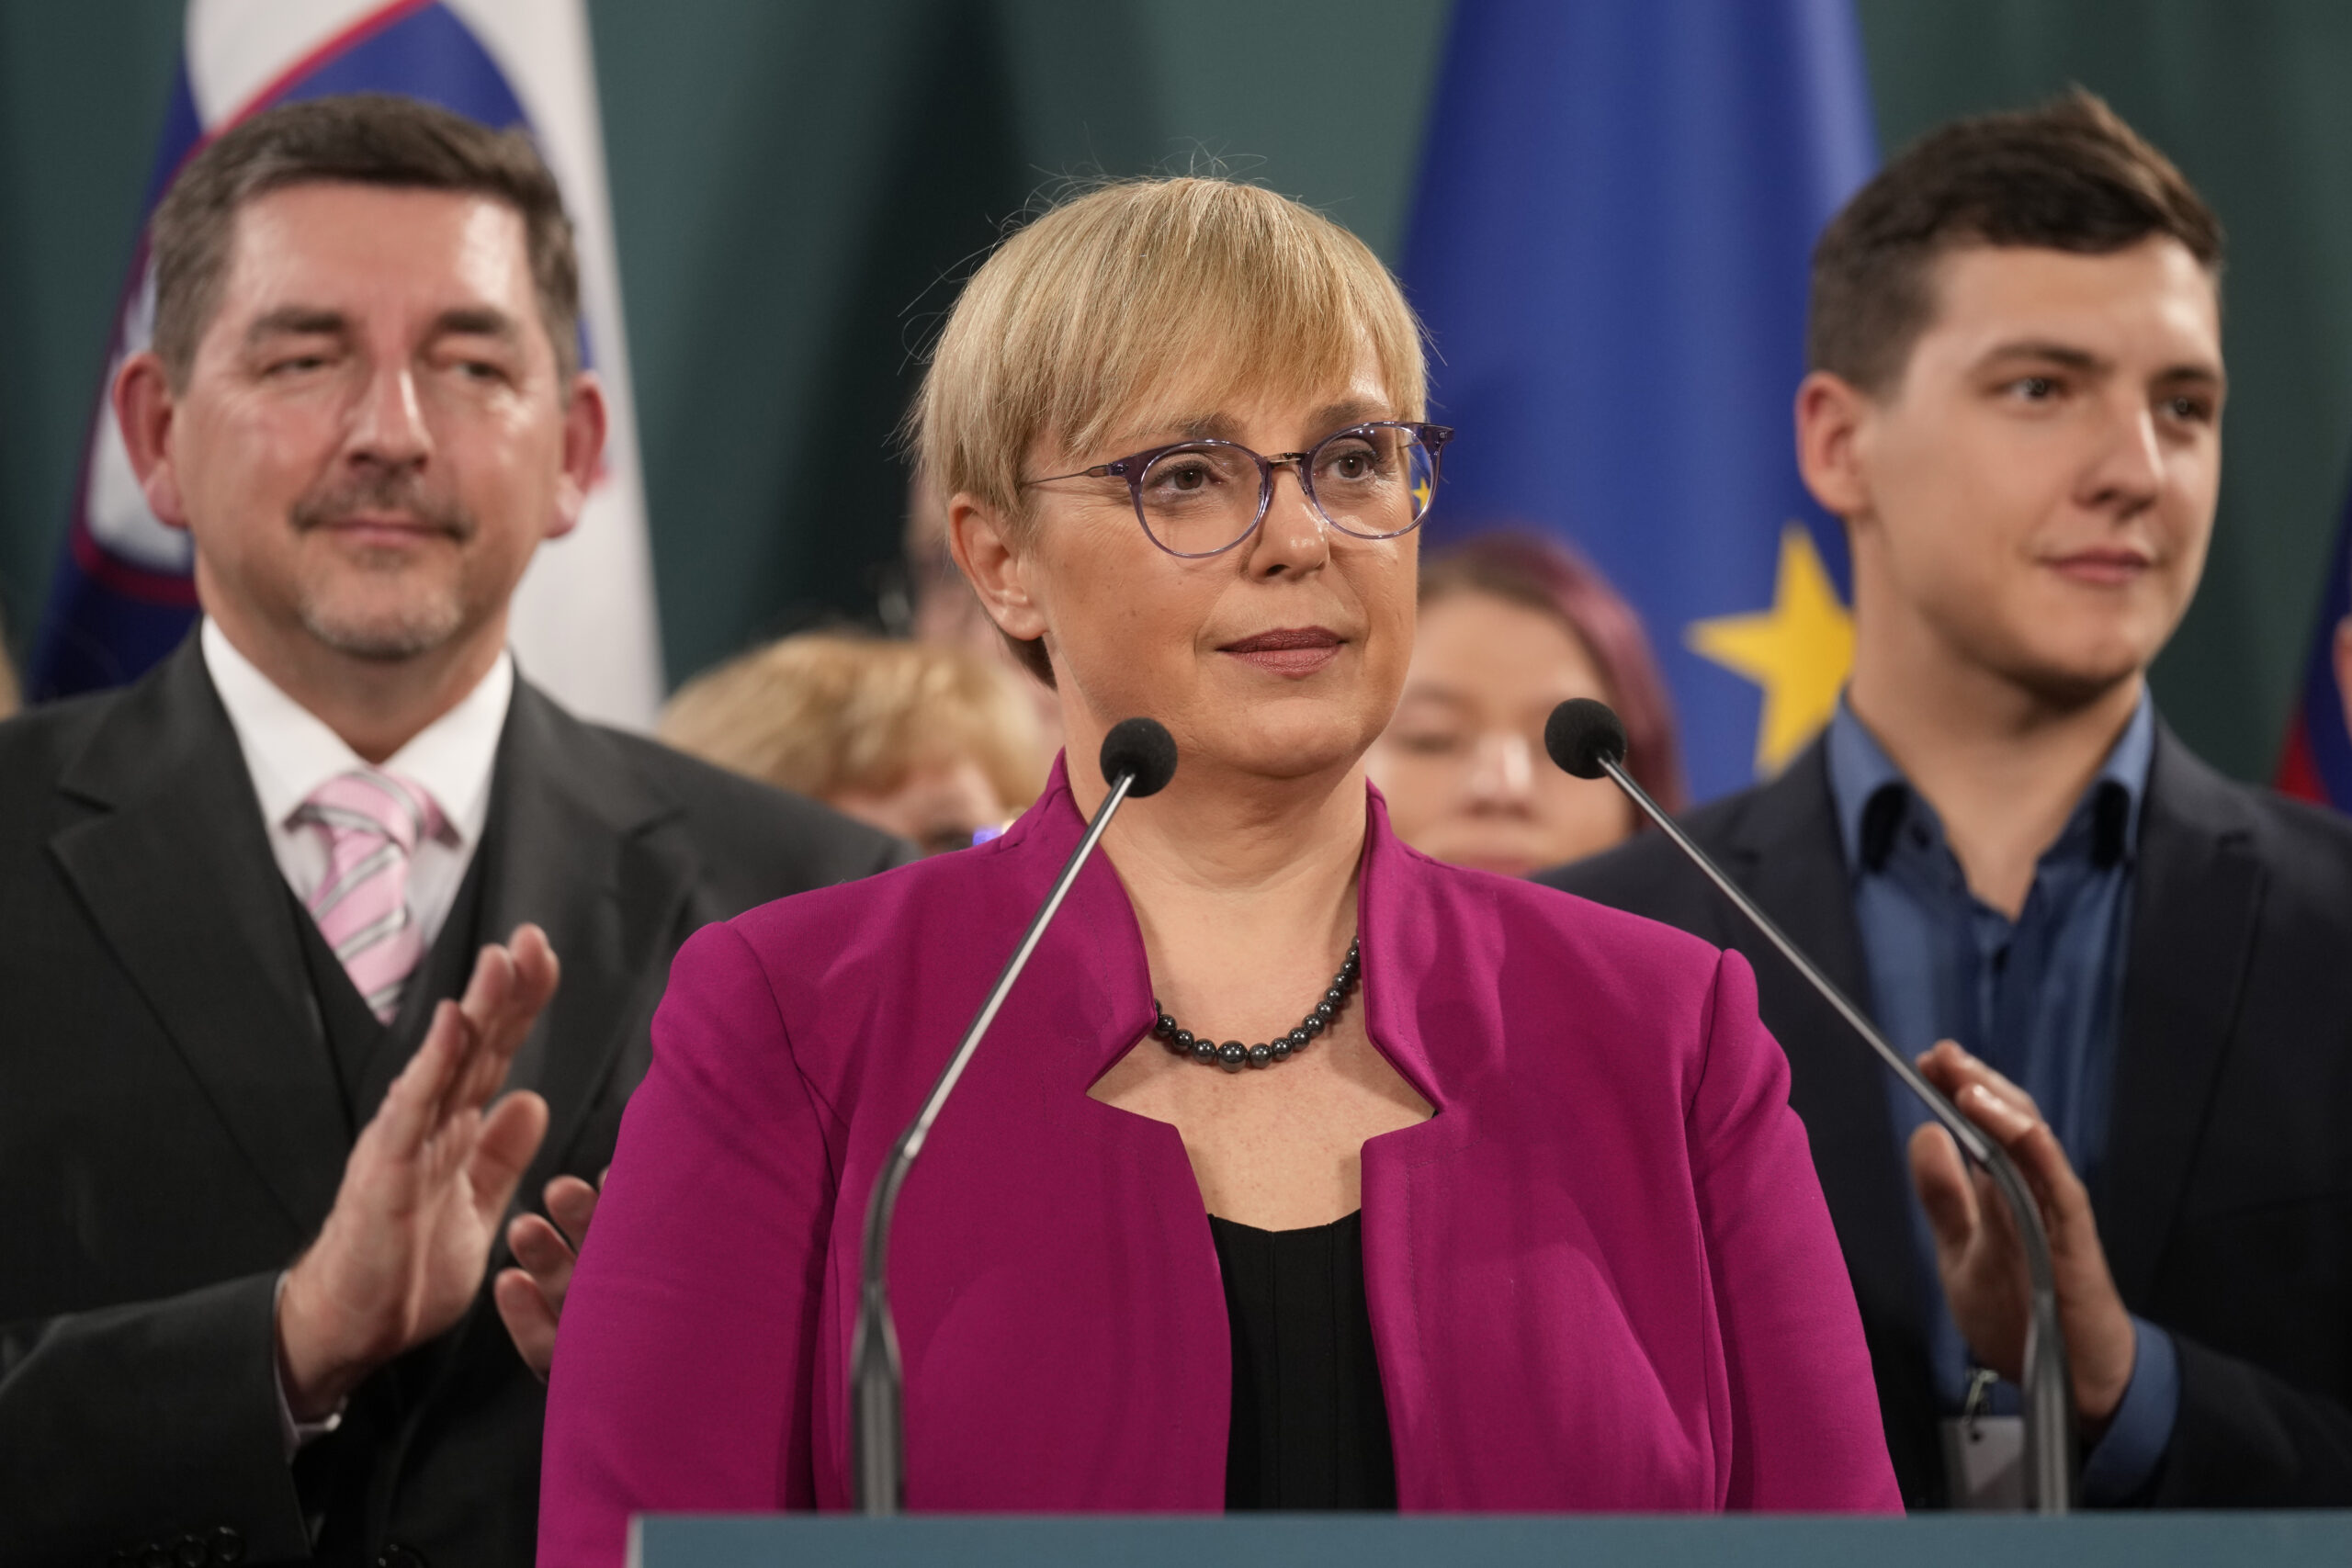 Melania Trump’s lawyer Natasa Pirc Musar elected Slovenia’s first female president - Washington Examiner